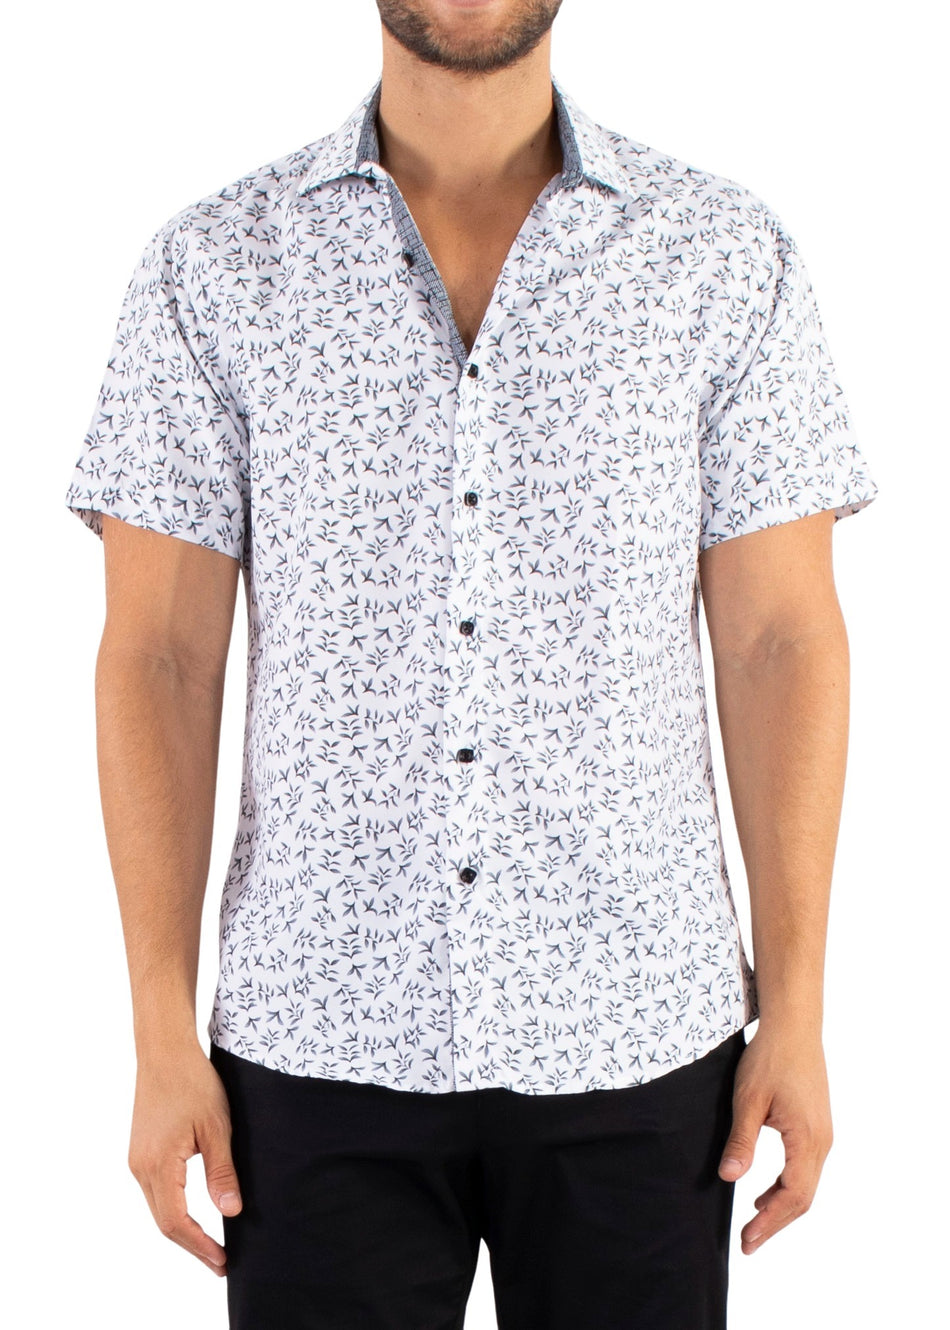 222065 - White Button Up Short Sleeve Shirt